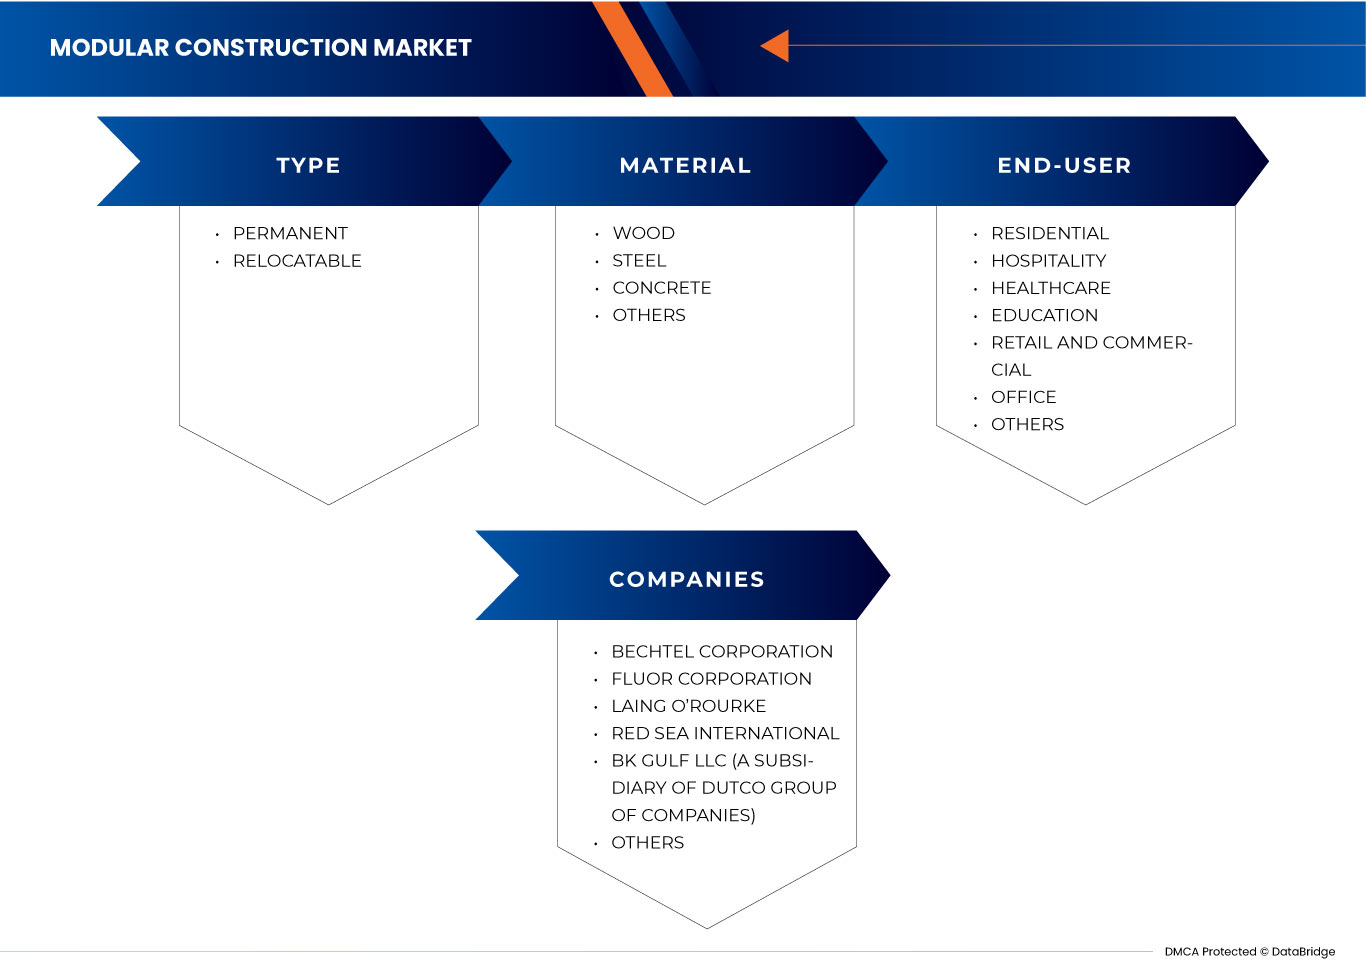 Saudi Arabia and U.A.E. Modular Construction Market